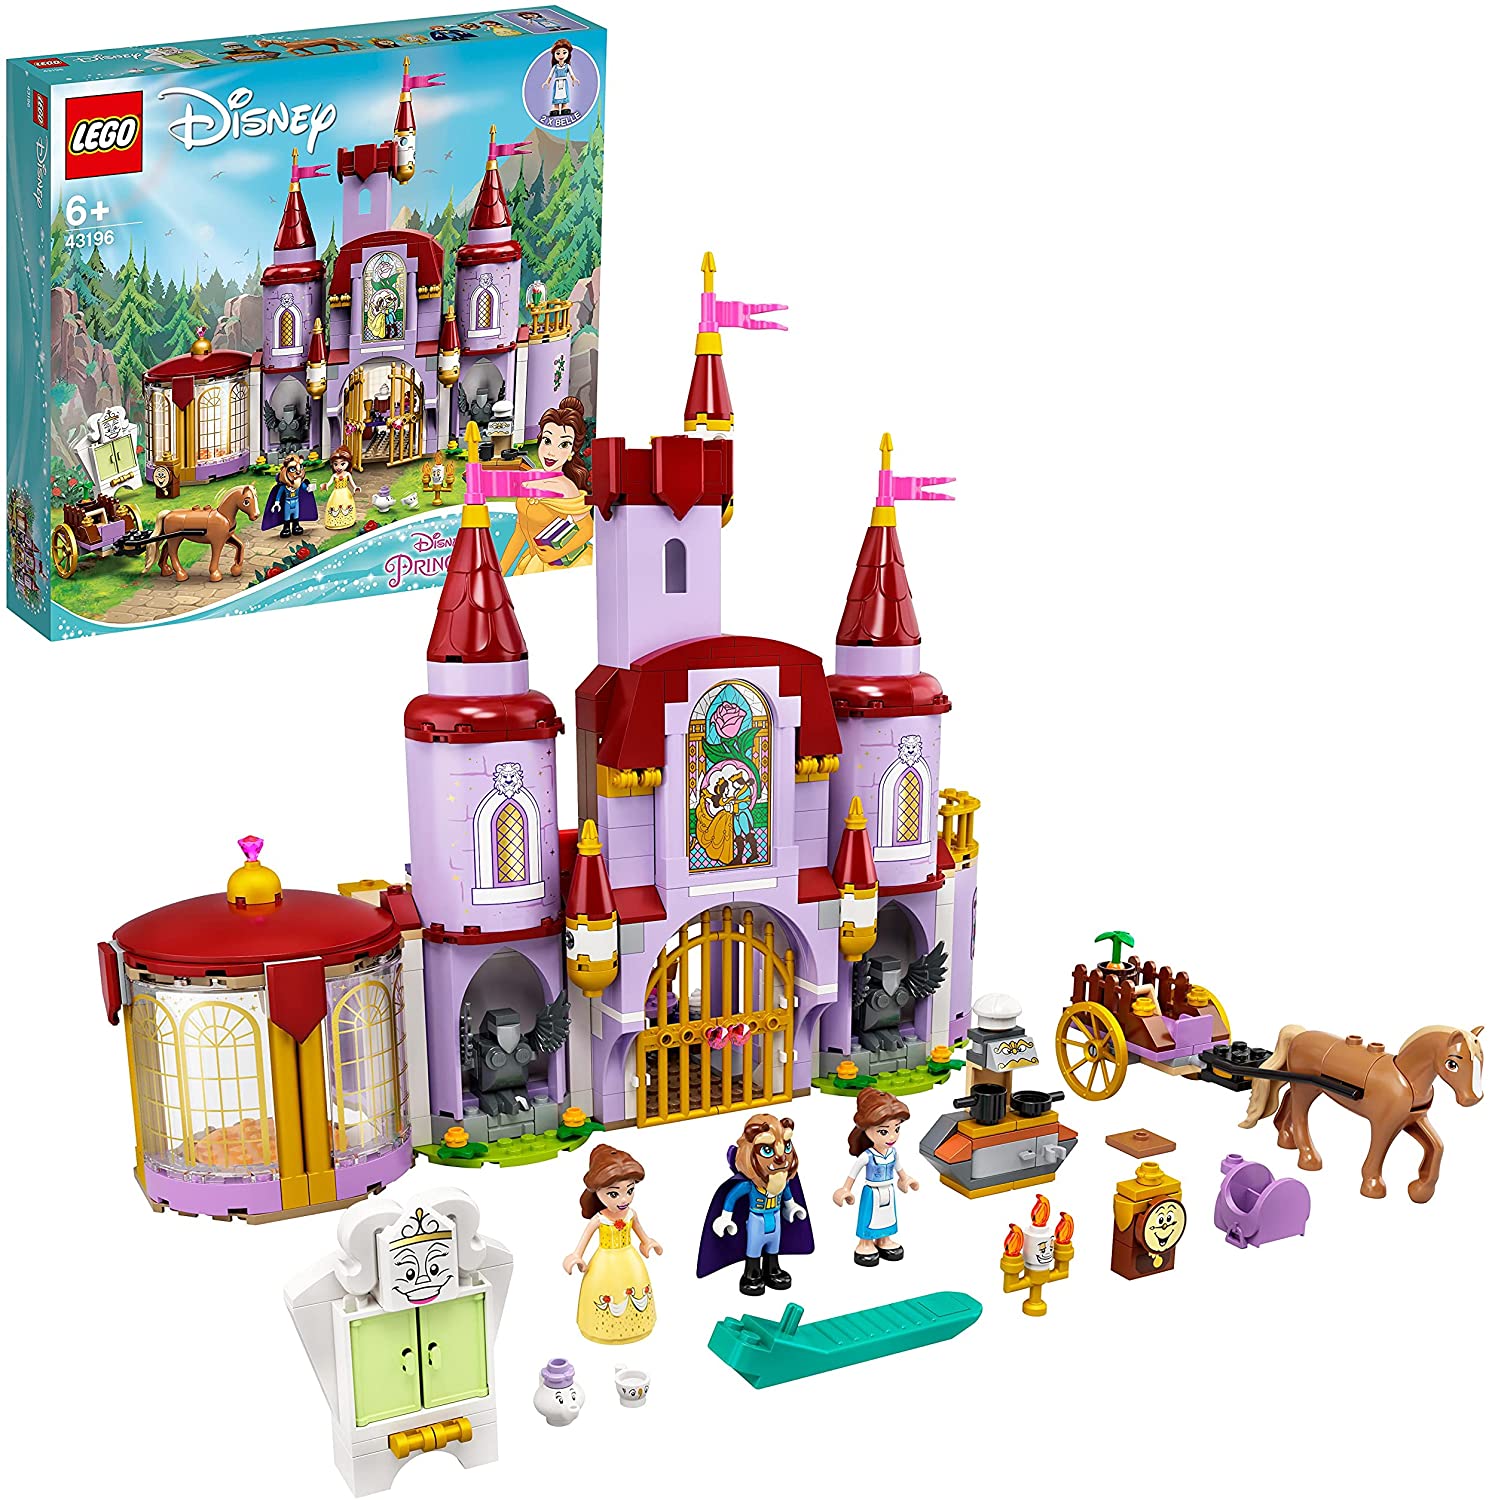 LEGO 43196 Disney Princess Belles Castle, Beauty and the Beast, Princess Ca